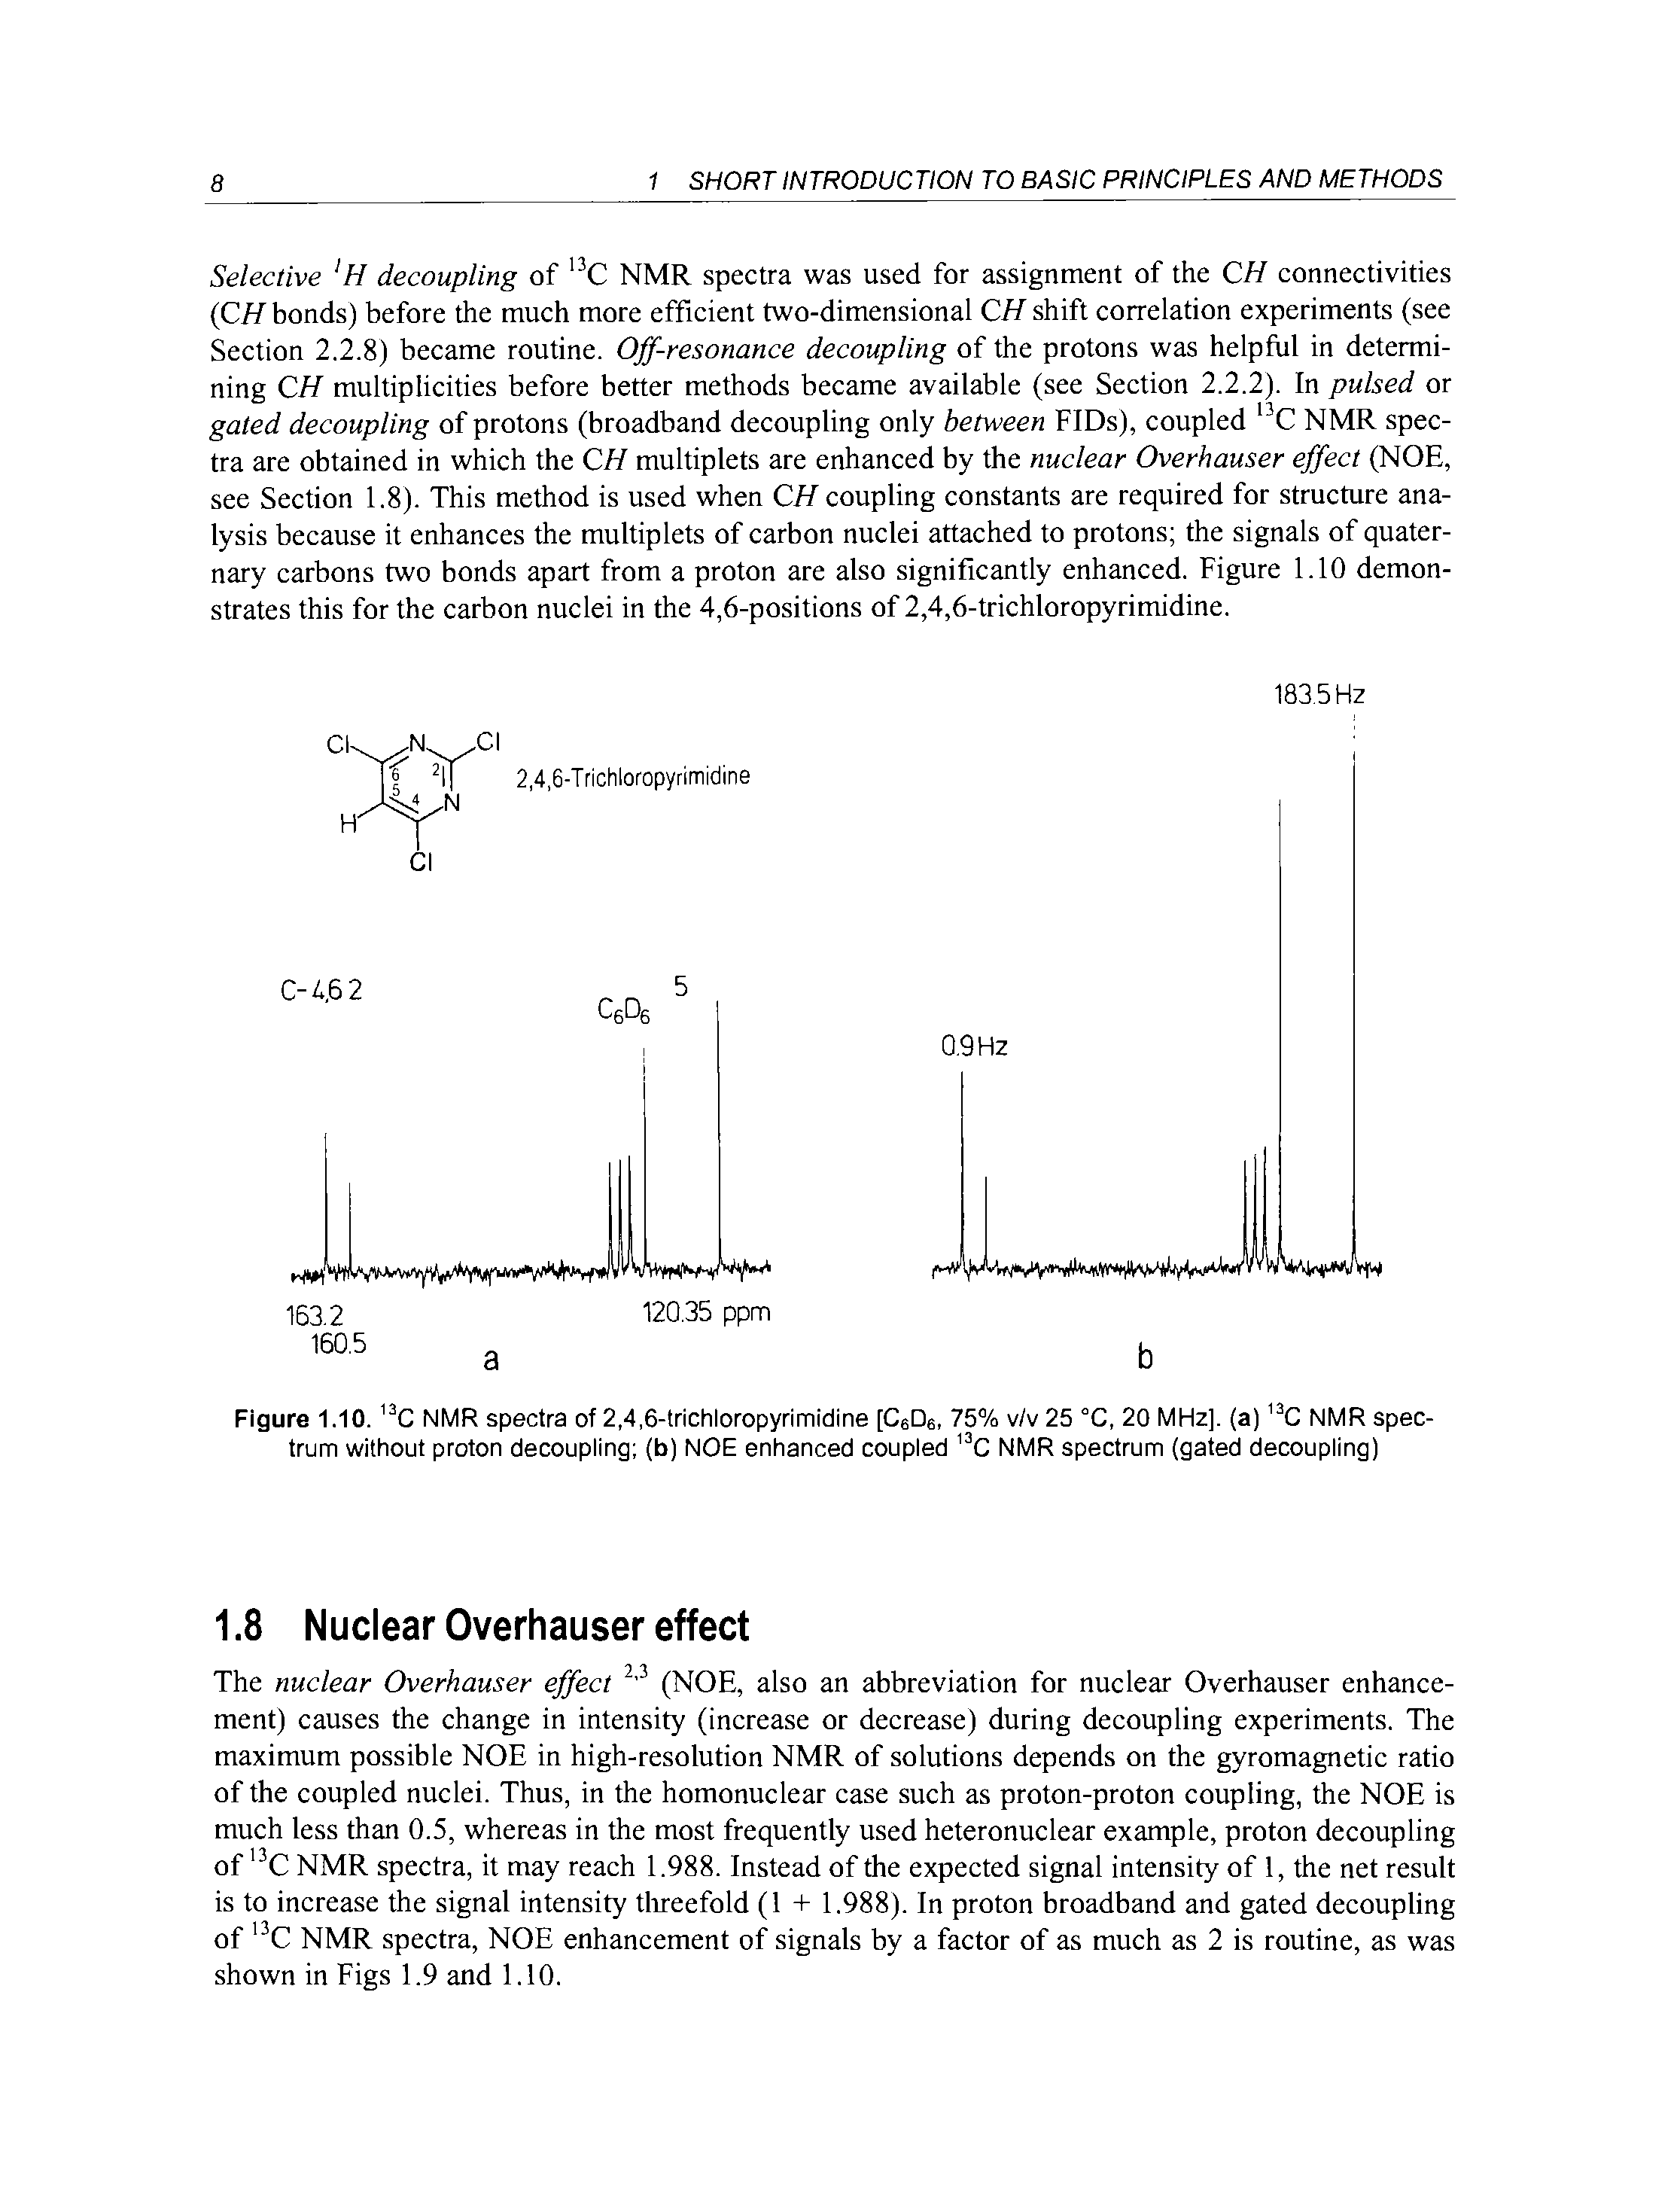 Figure 1.10. NMR spectra of 2,4,6-trichloropyrimidine [CeDe, 75% v/v 25 °C, 20 MHz], (a) NMR spectrum without proton decoupling (b) NOE enhanced coupled NMR spectrum (gated decoupling)...